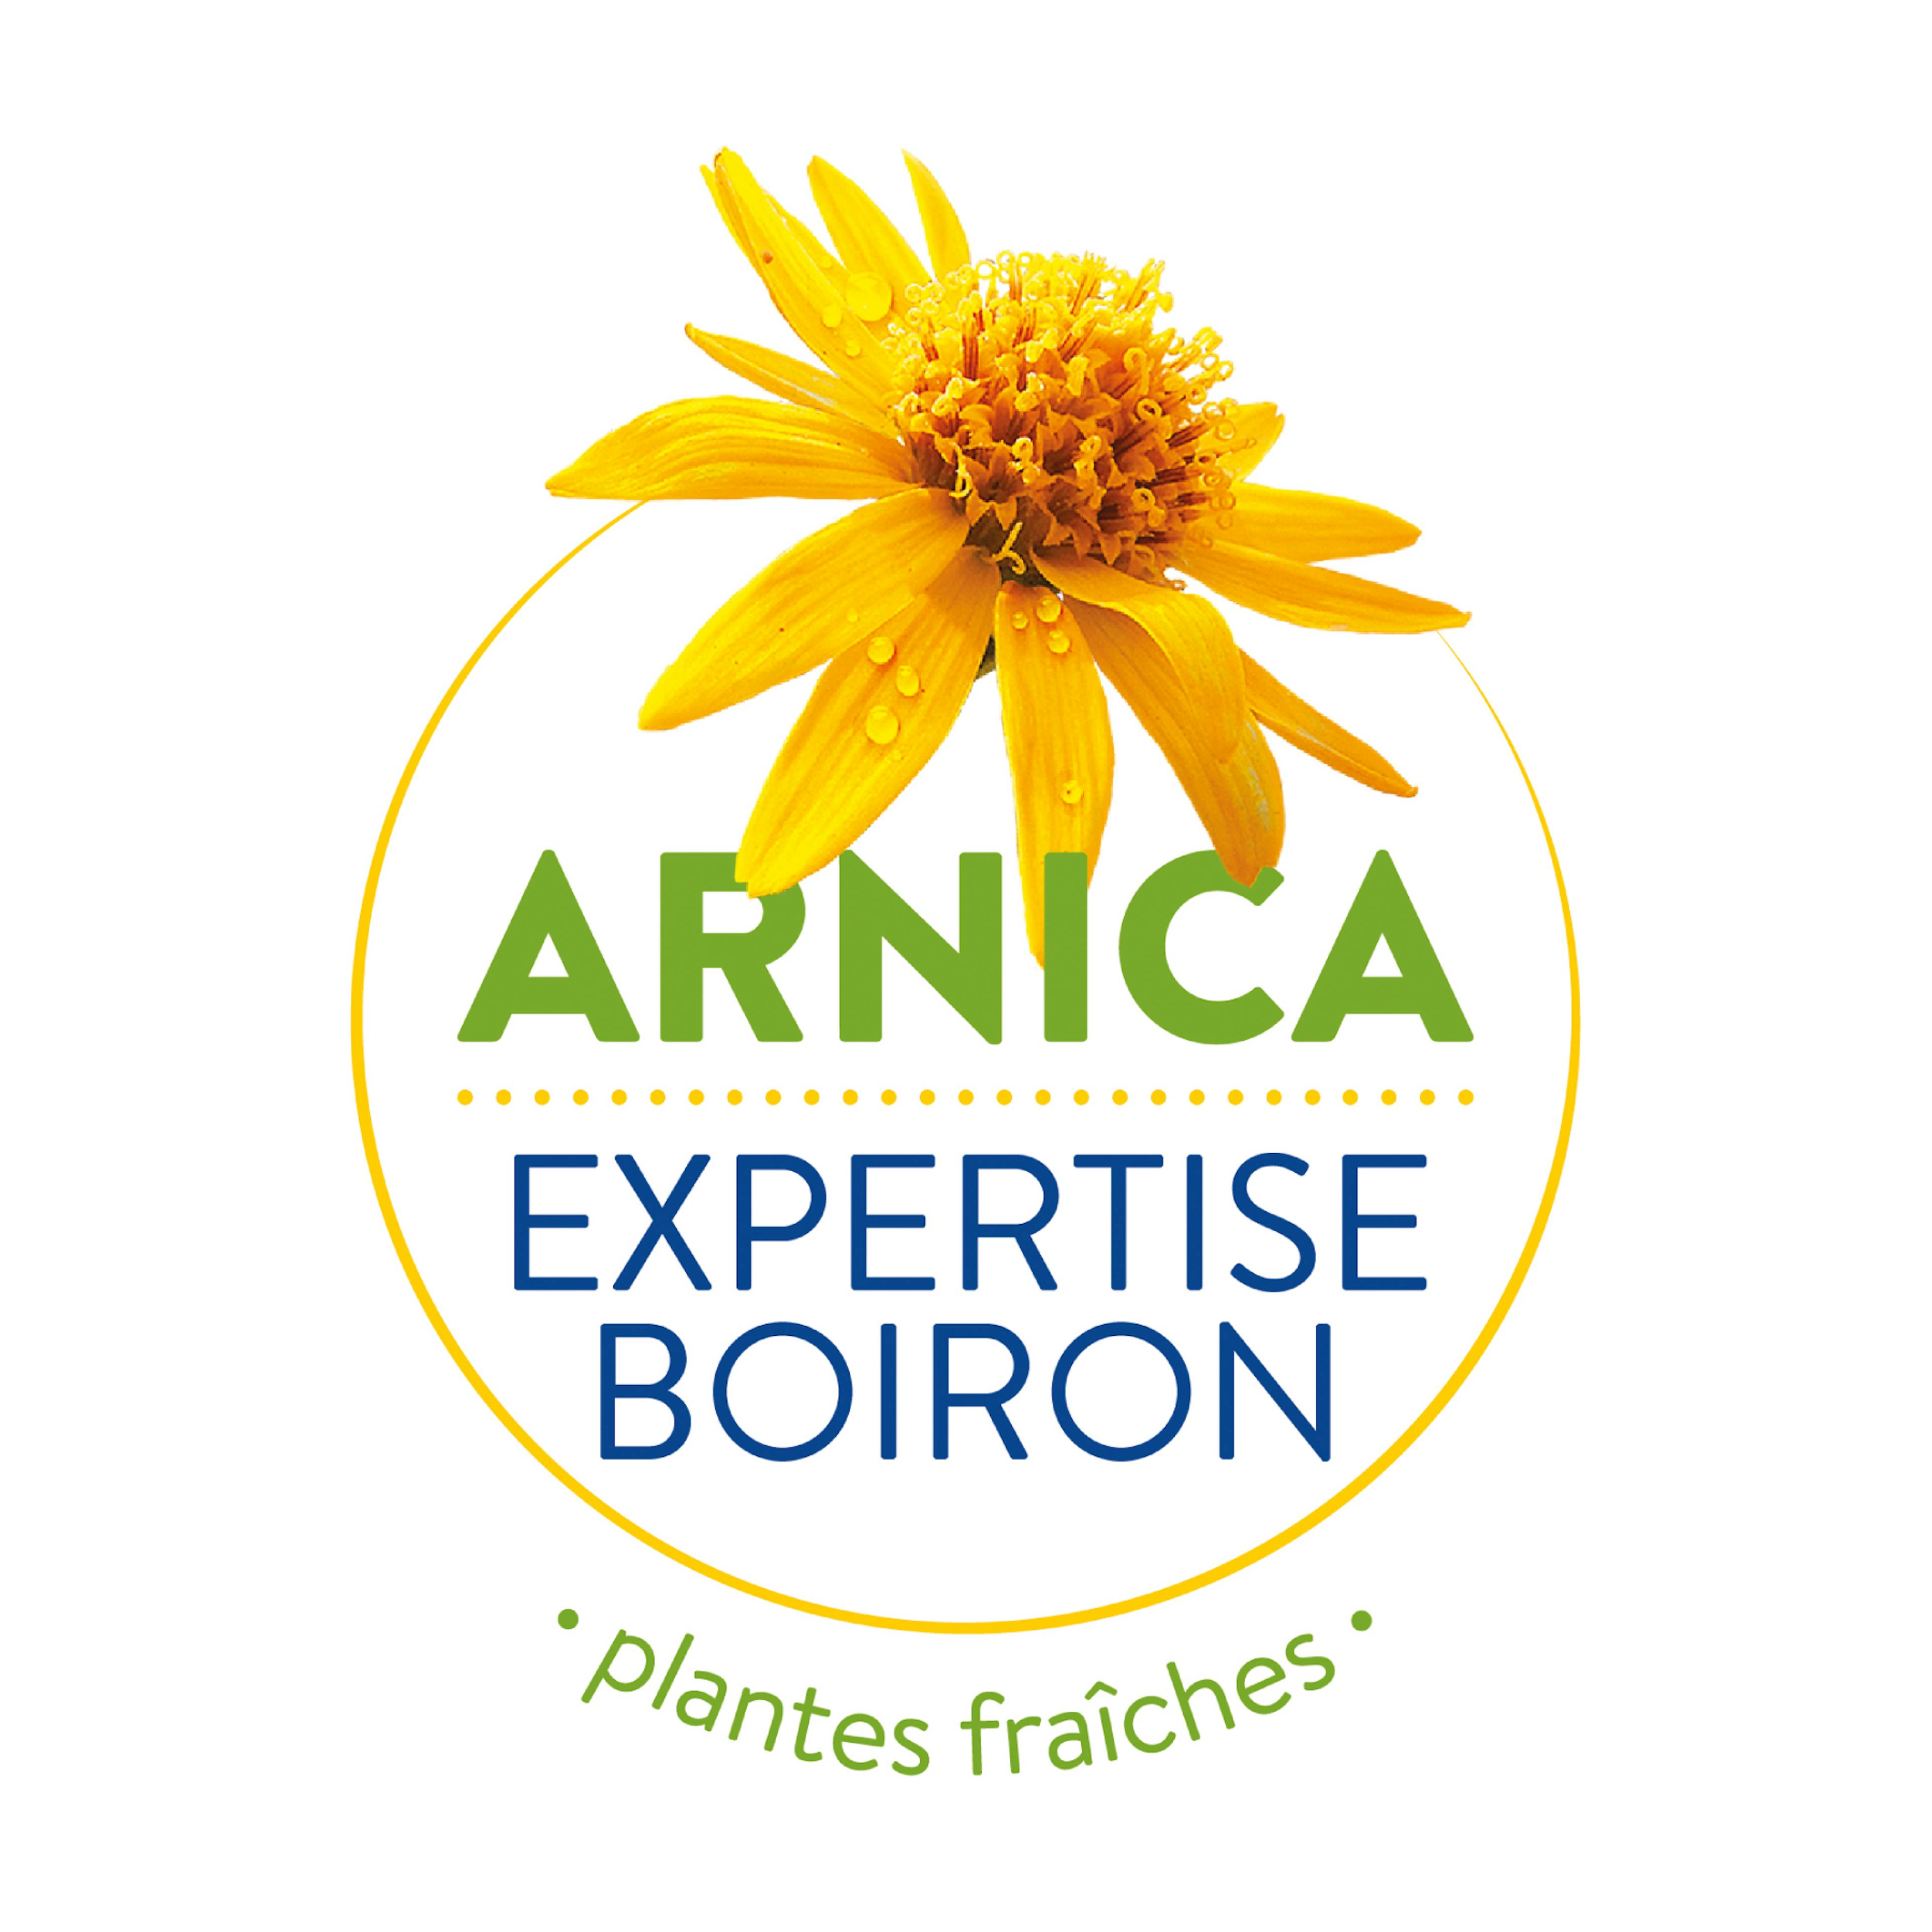 Arnica expertise Boiron